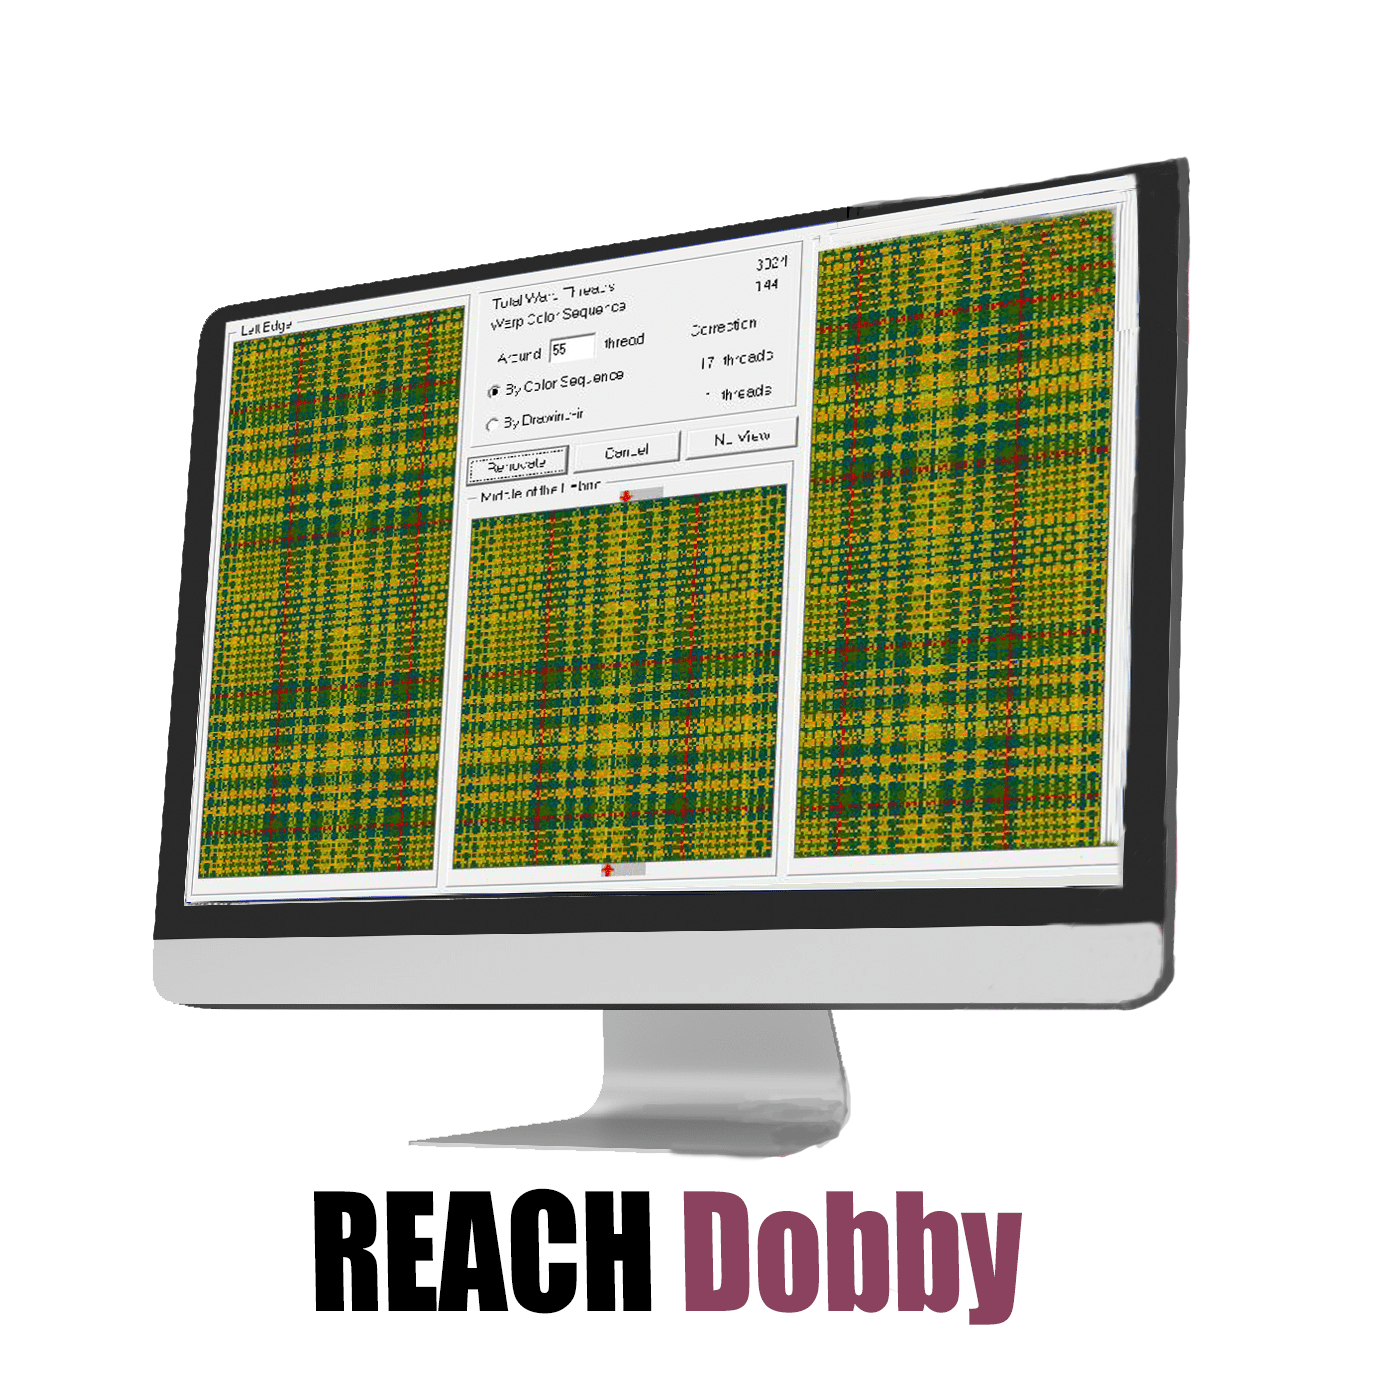 REACH Dobby Image 1